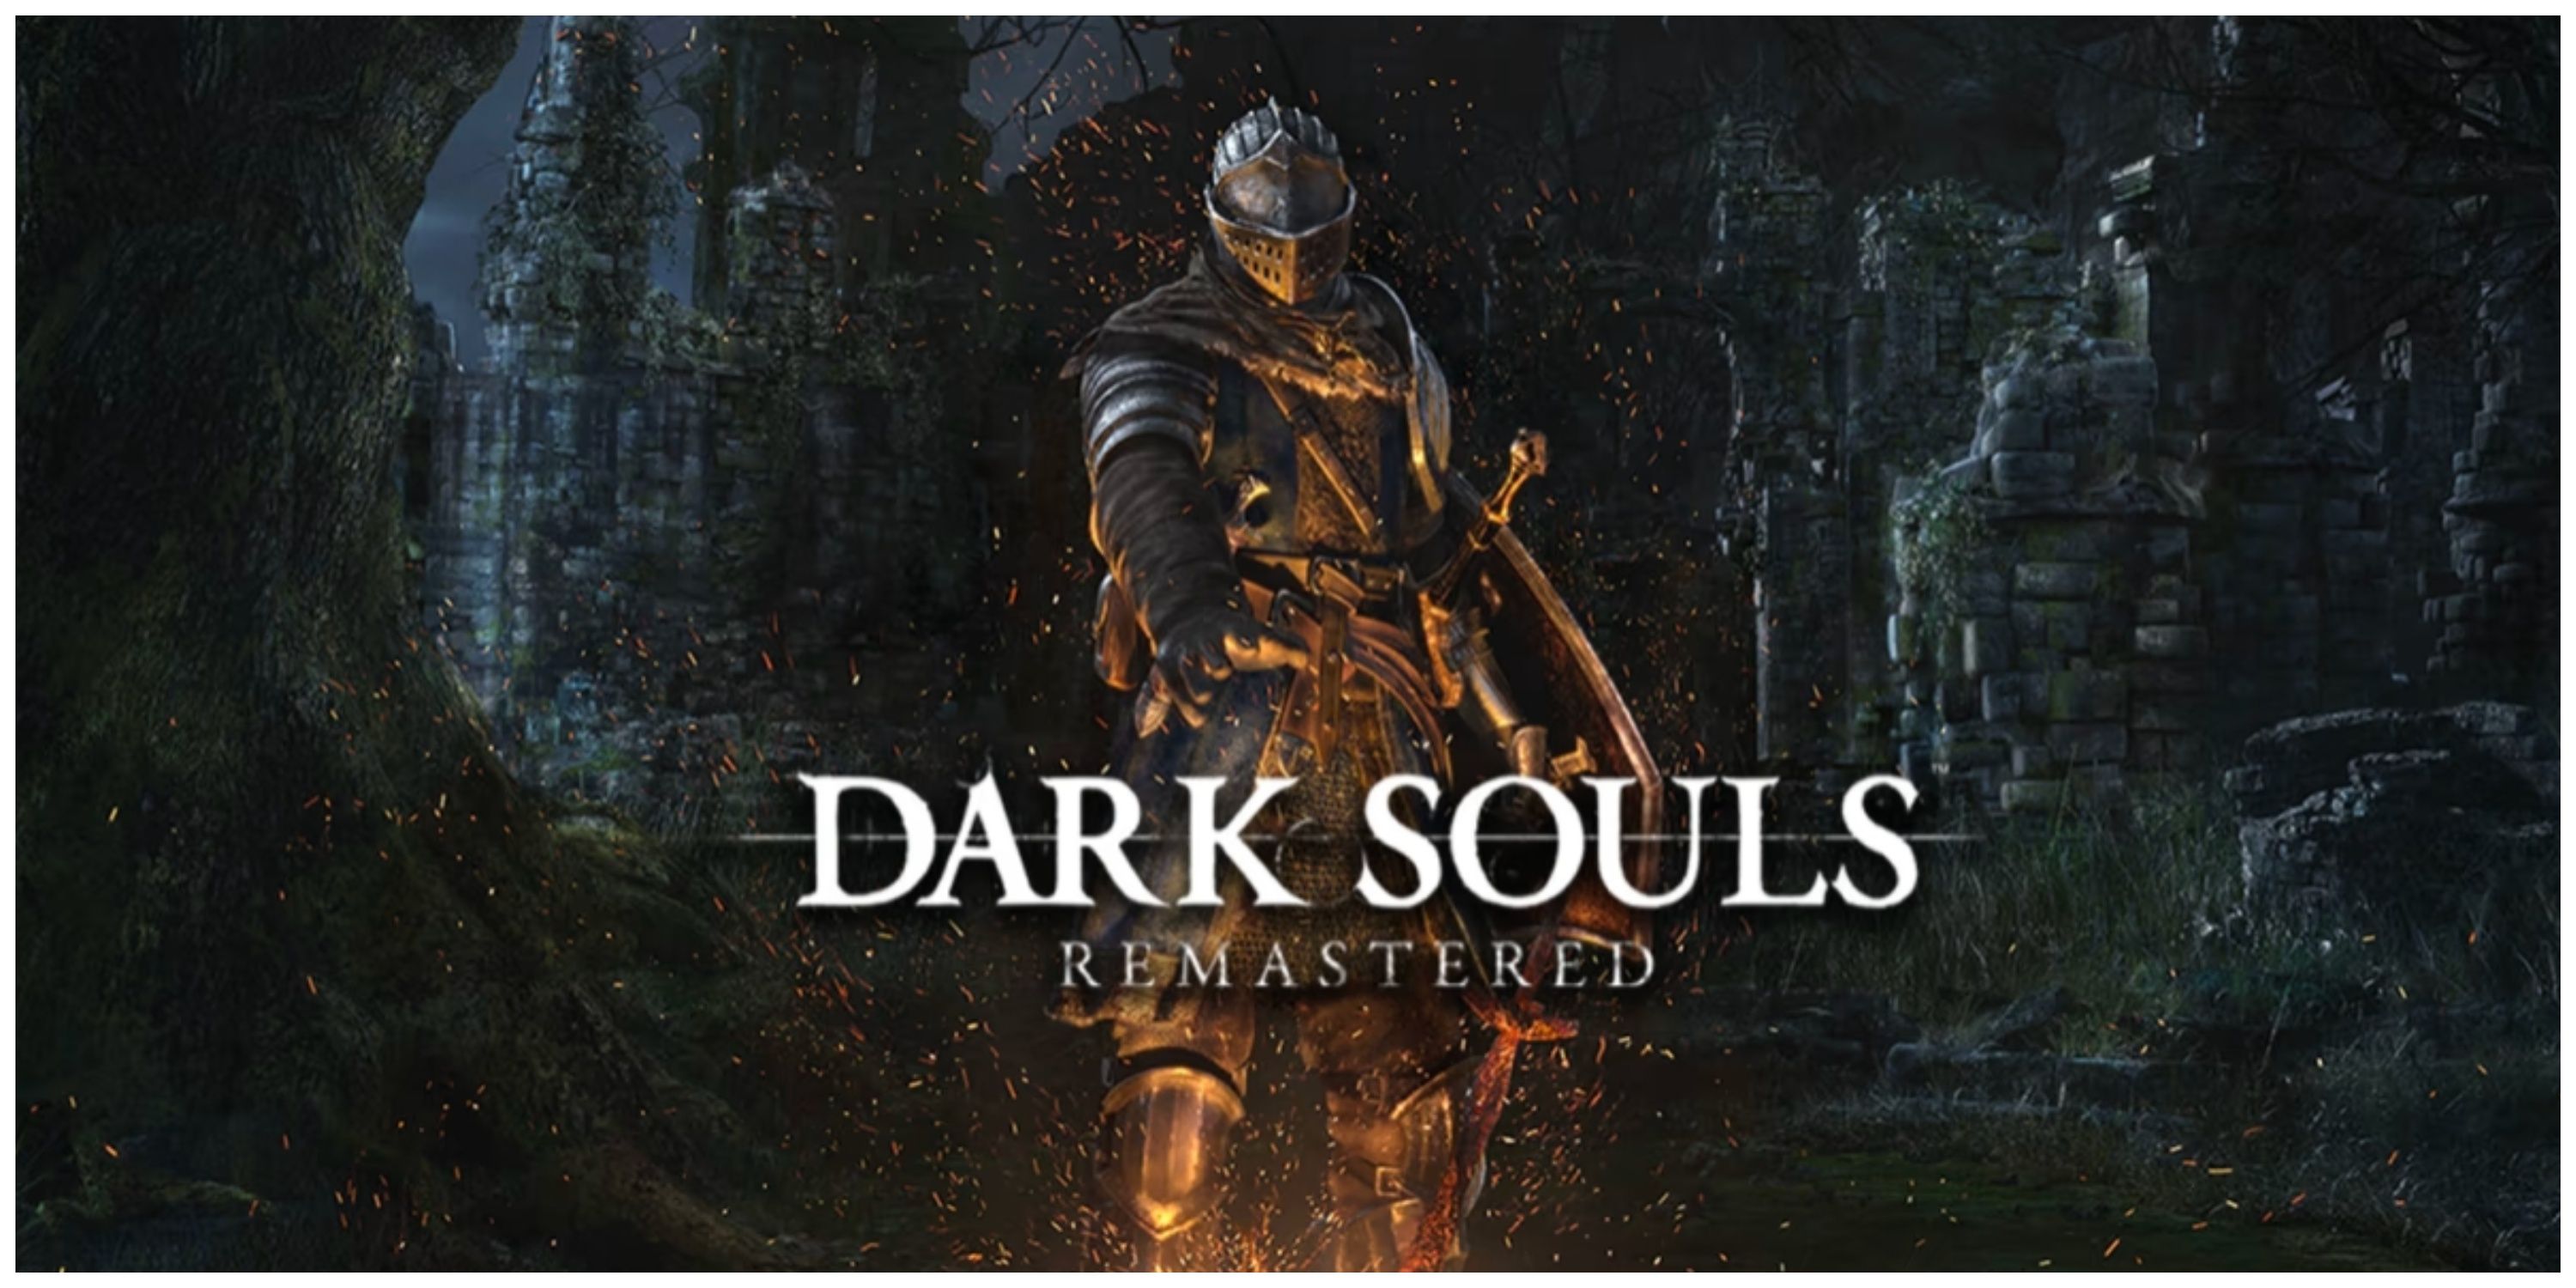 Dark Souls Remastered title art